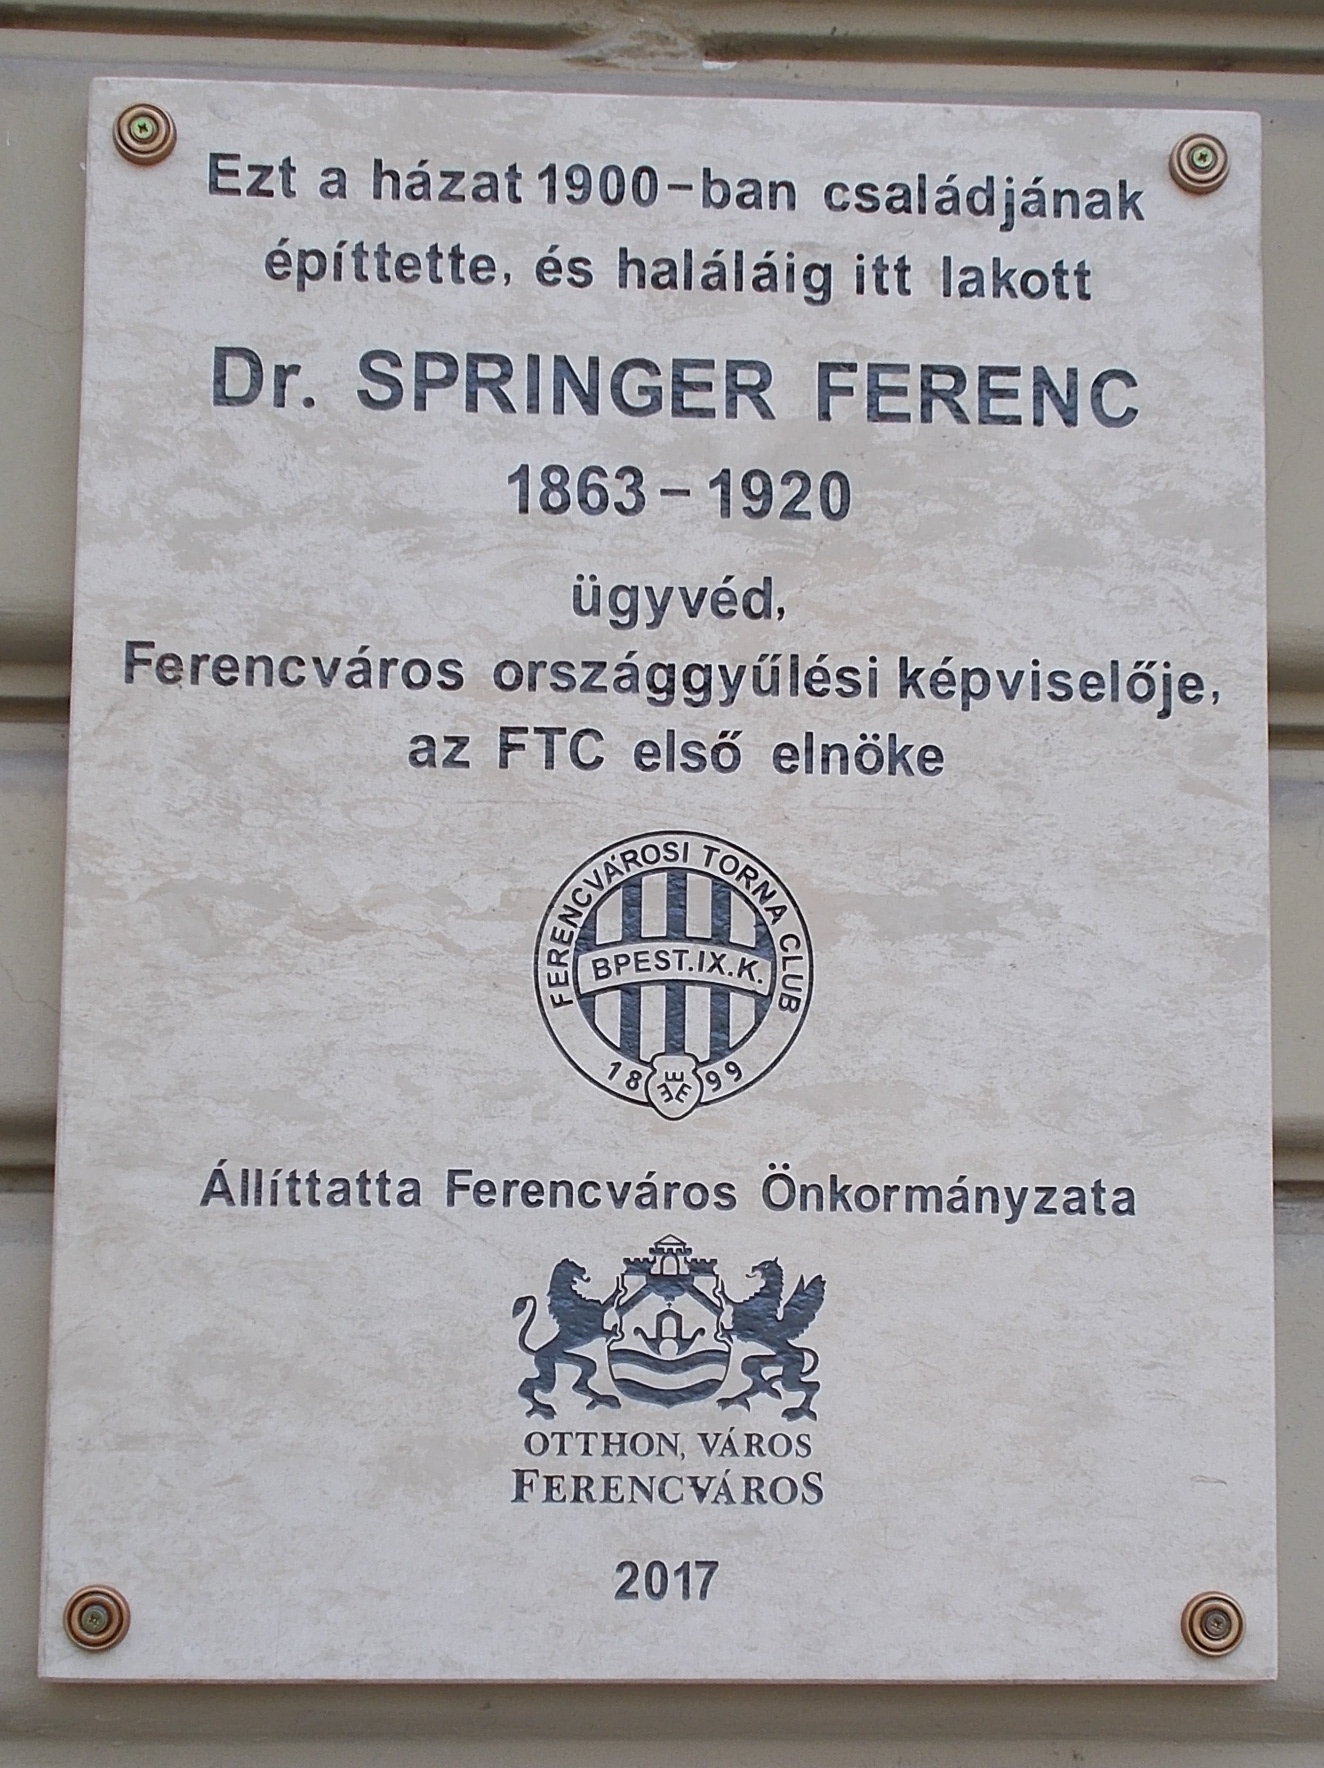 History of Ferencvárosi TC - Wikipedia